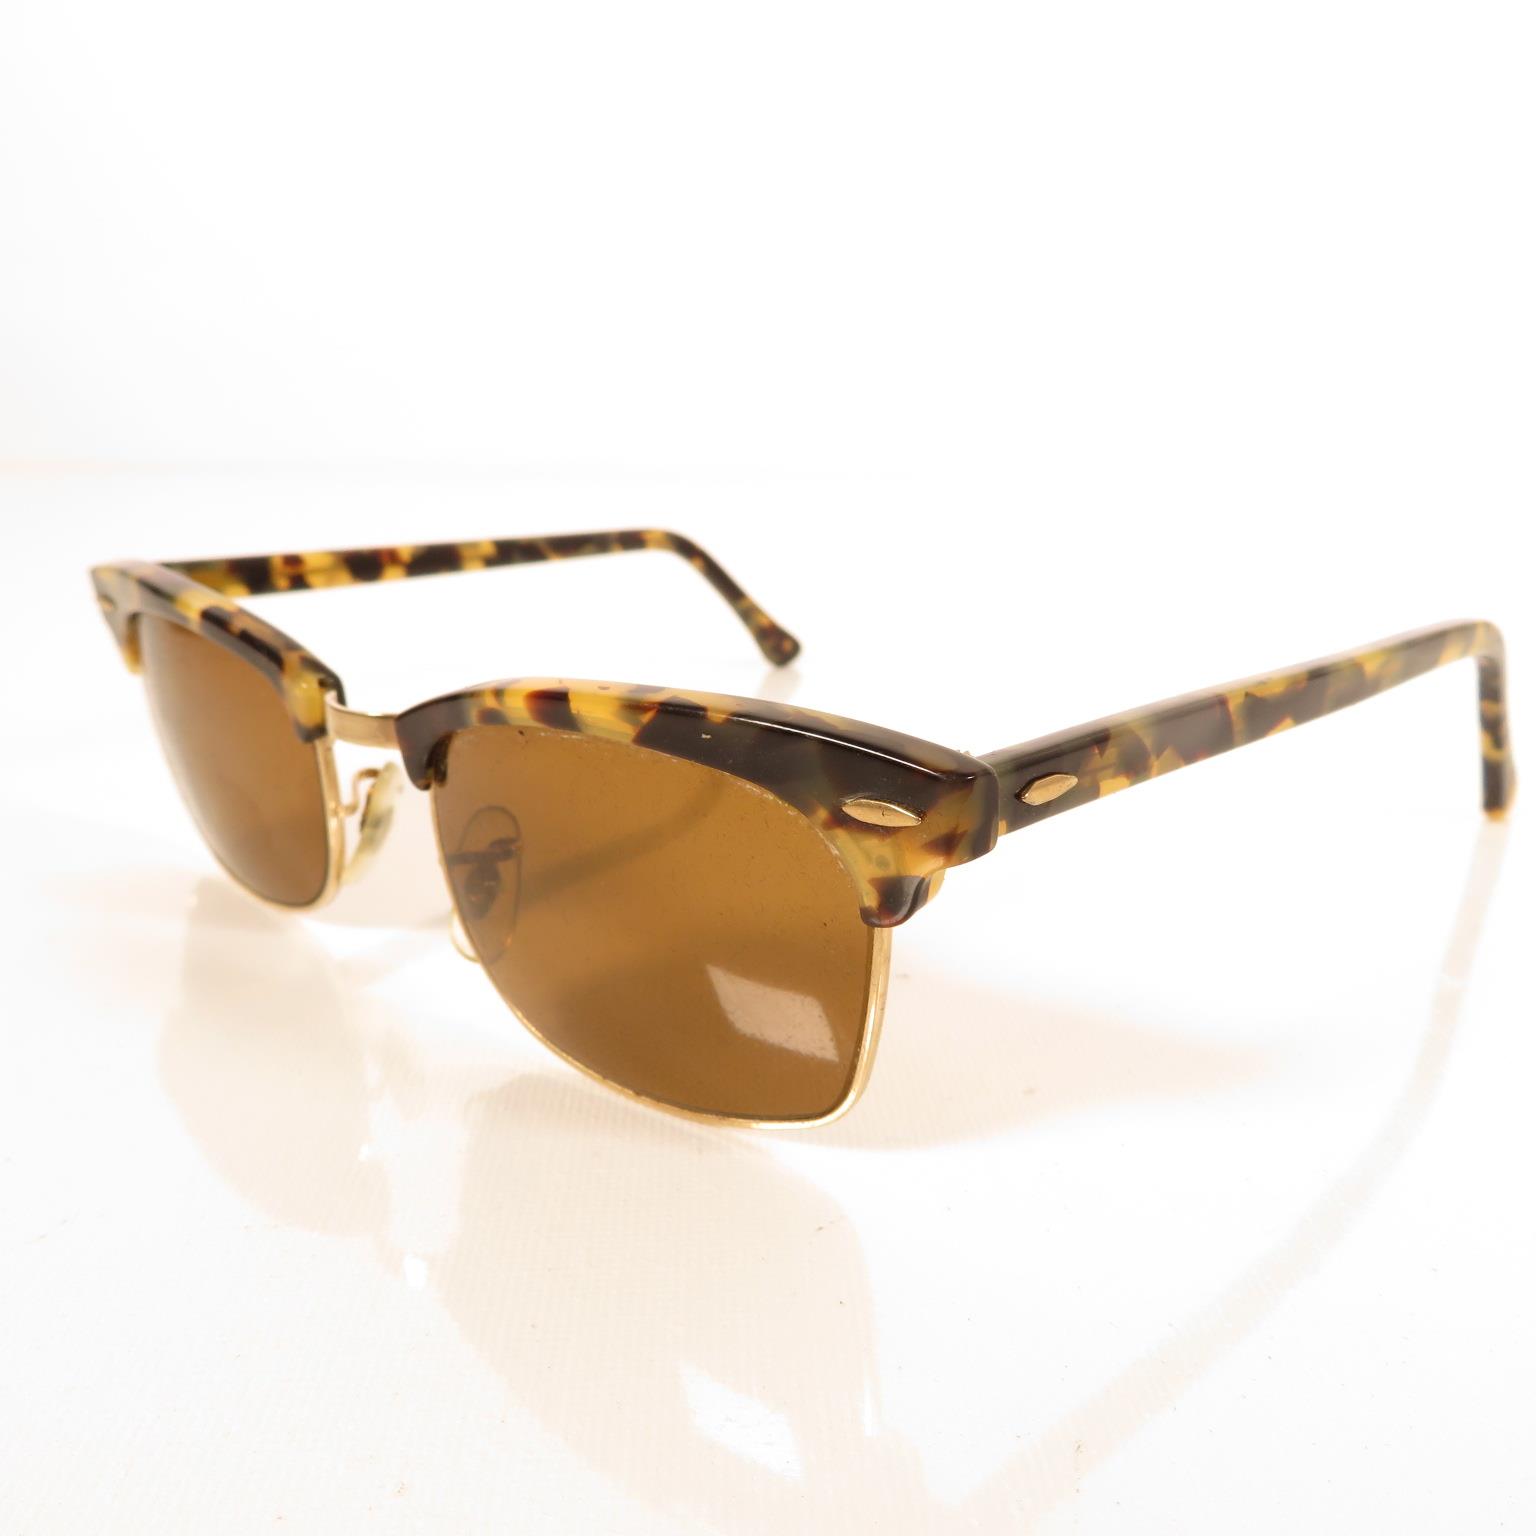 6x pairs Ray Ban sunglasses - - Image 29 of 31